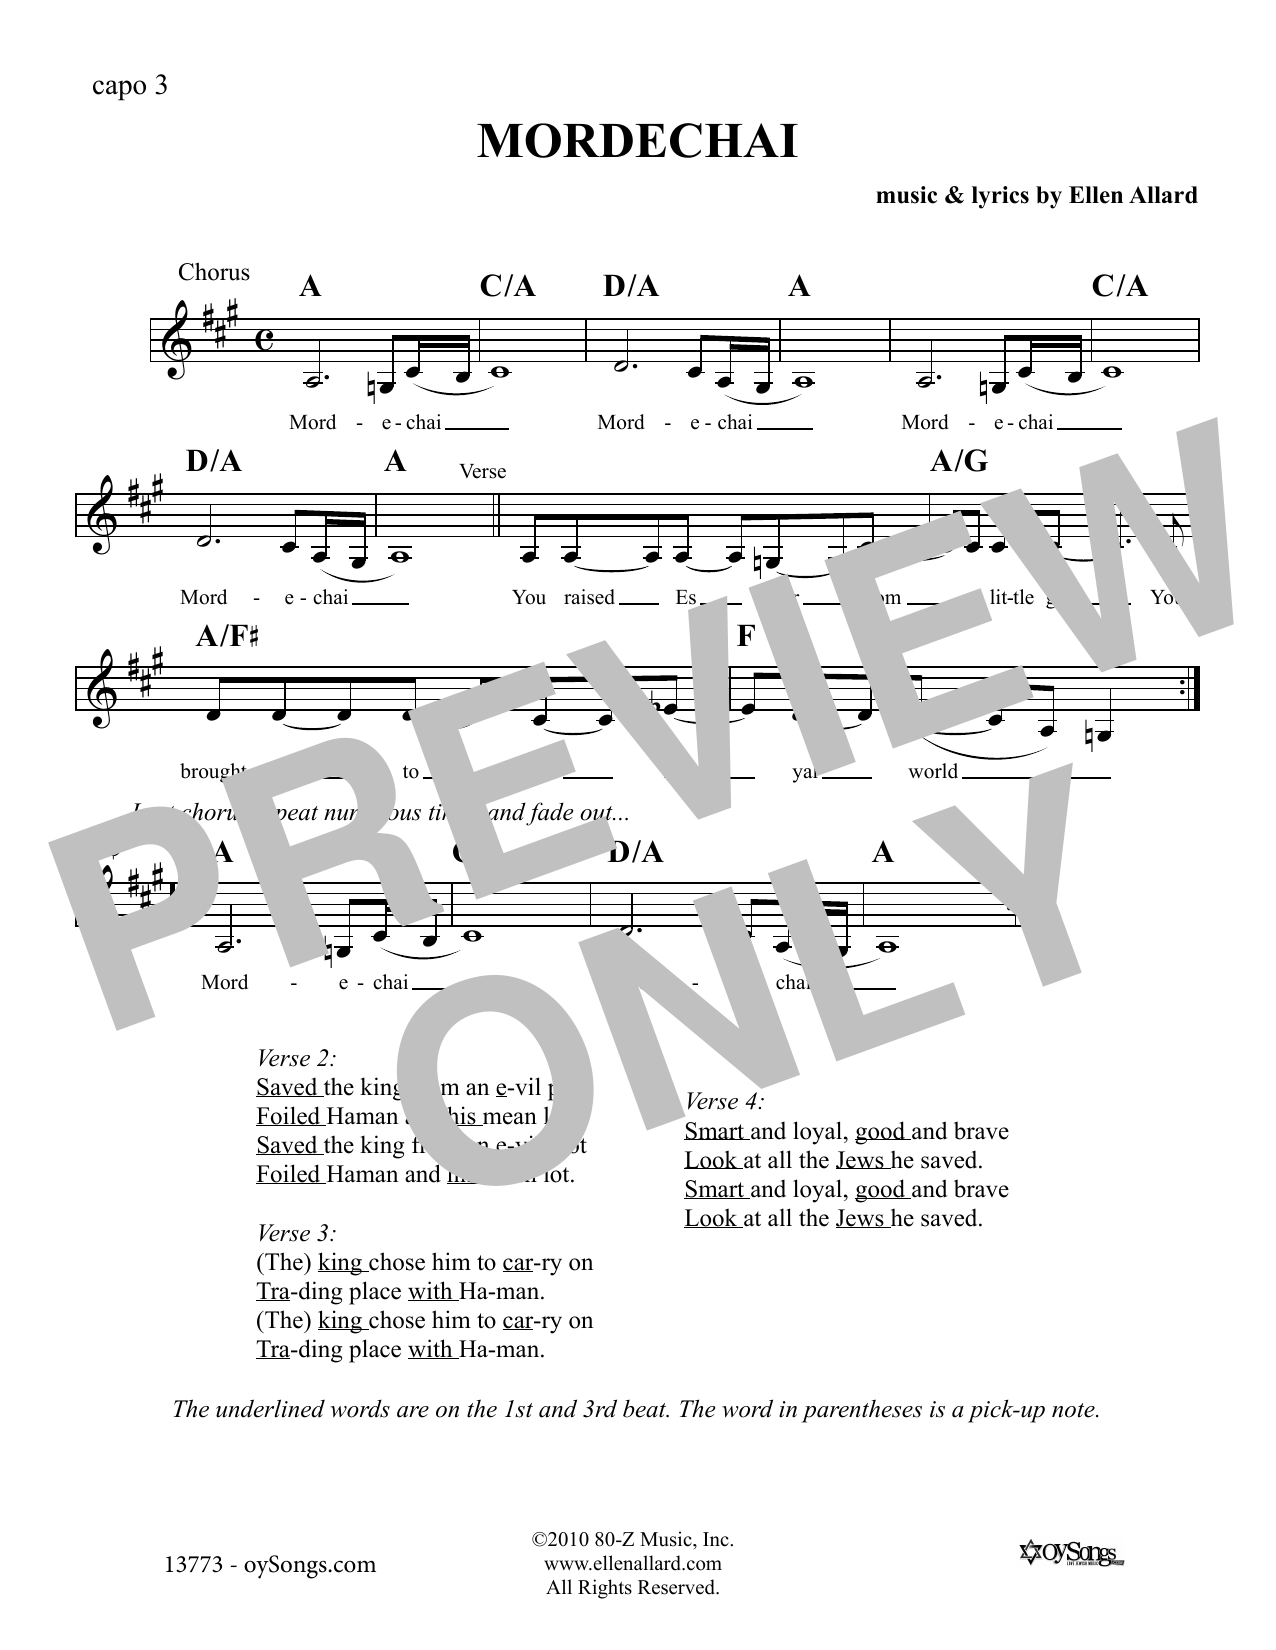 Ellen Allard Mordechai Sheet Music Notes & Chords for Melody Line, Lyrics & Chords - Download or Print PDF